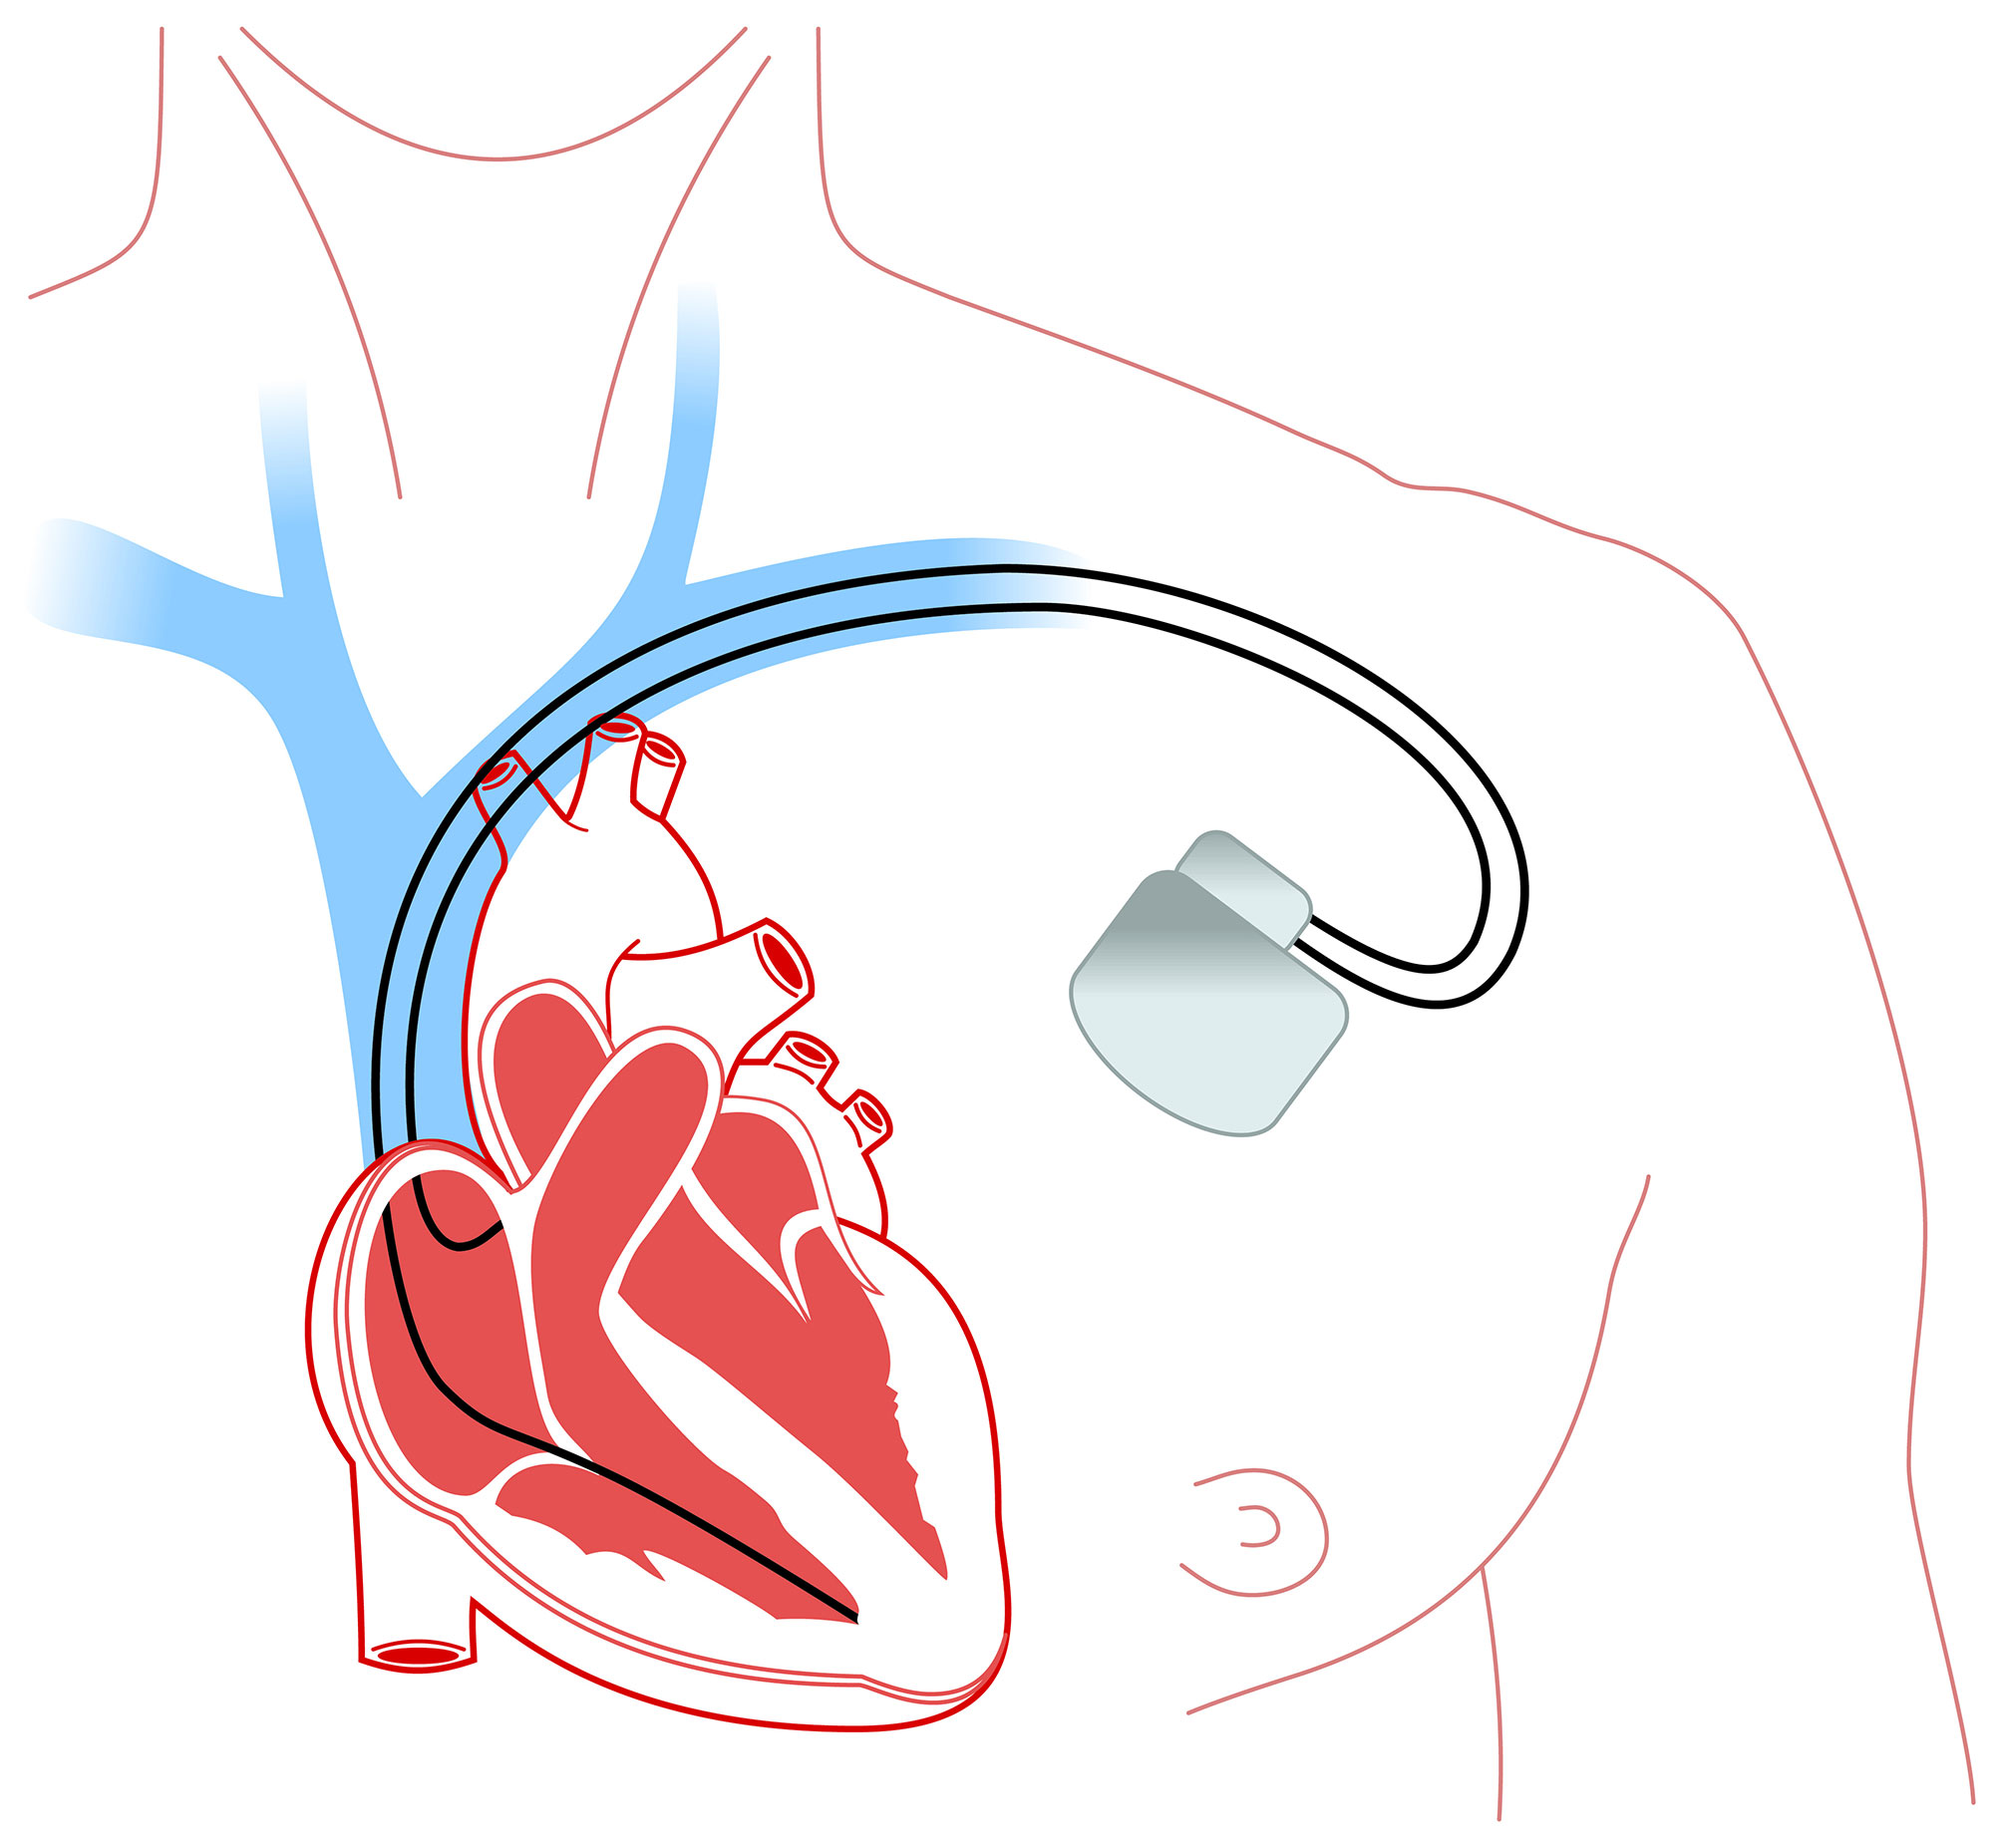 Pacemaker-defibrillator-monitoring